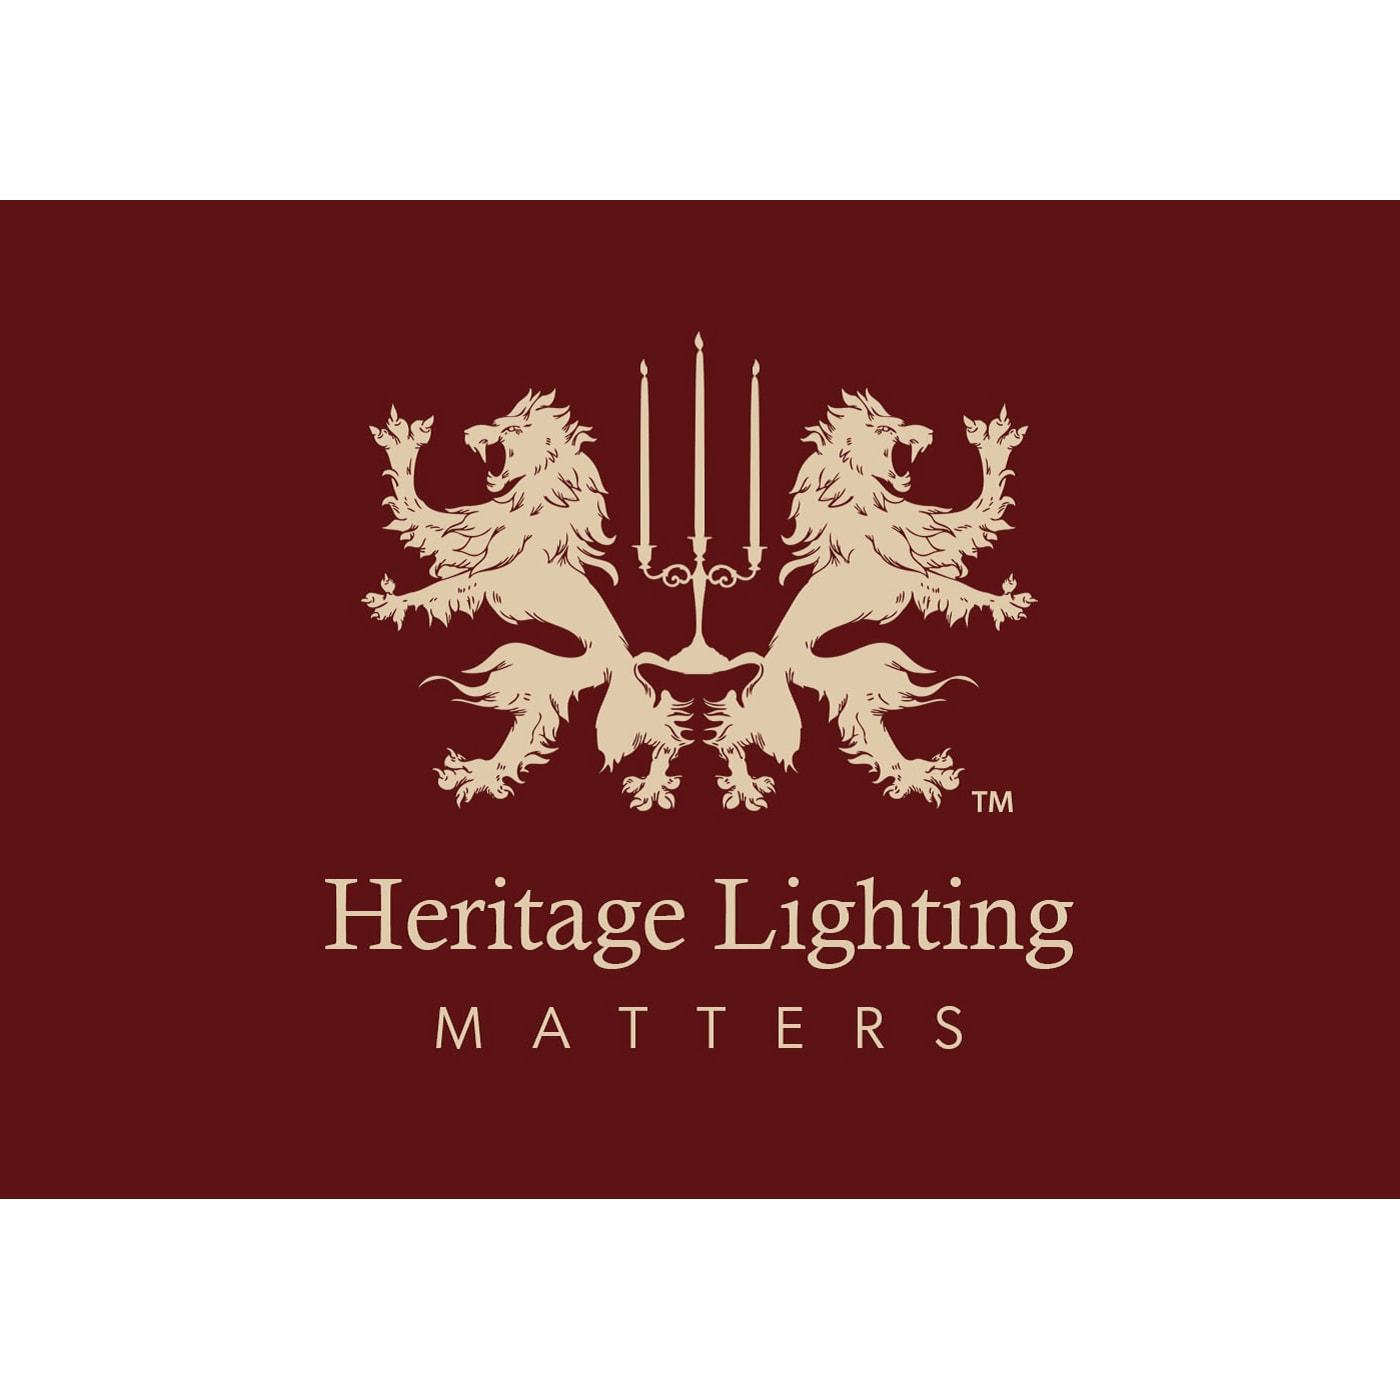 Heritage Lighting Matters Ltd Logo